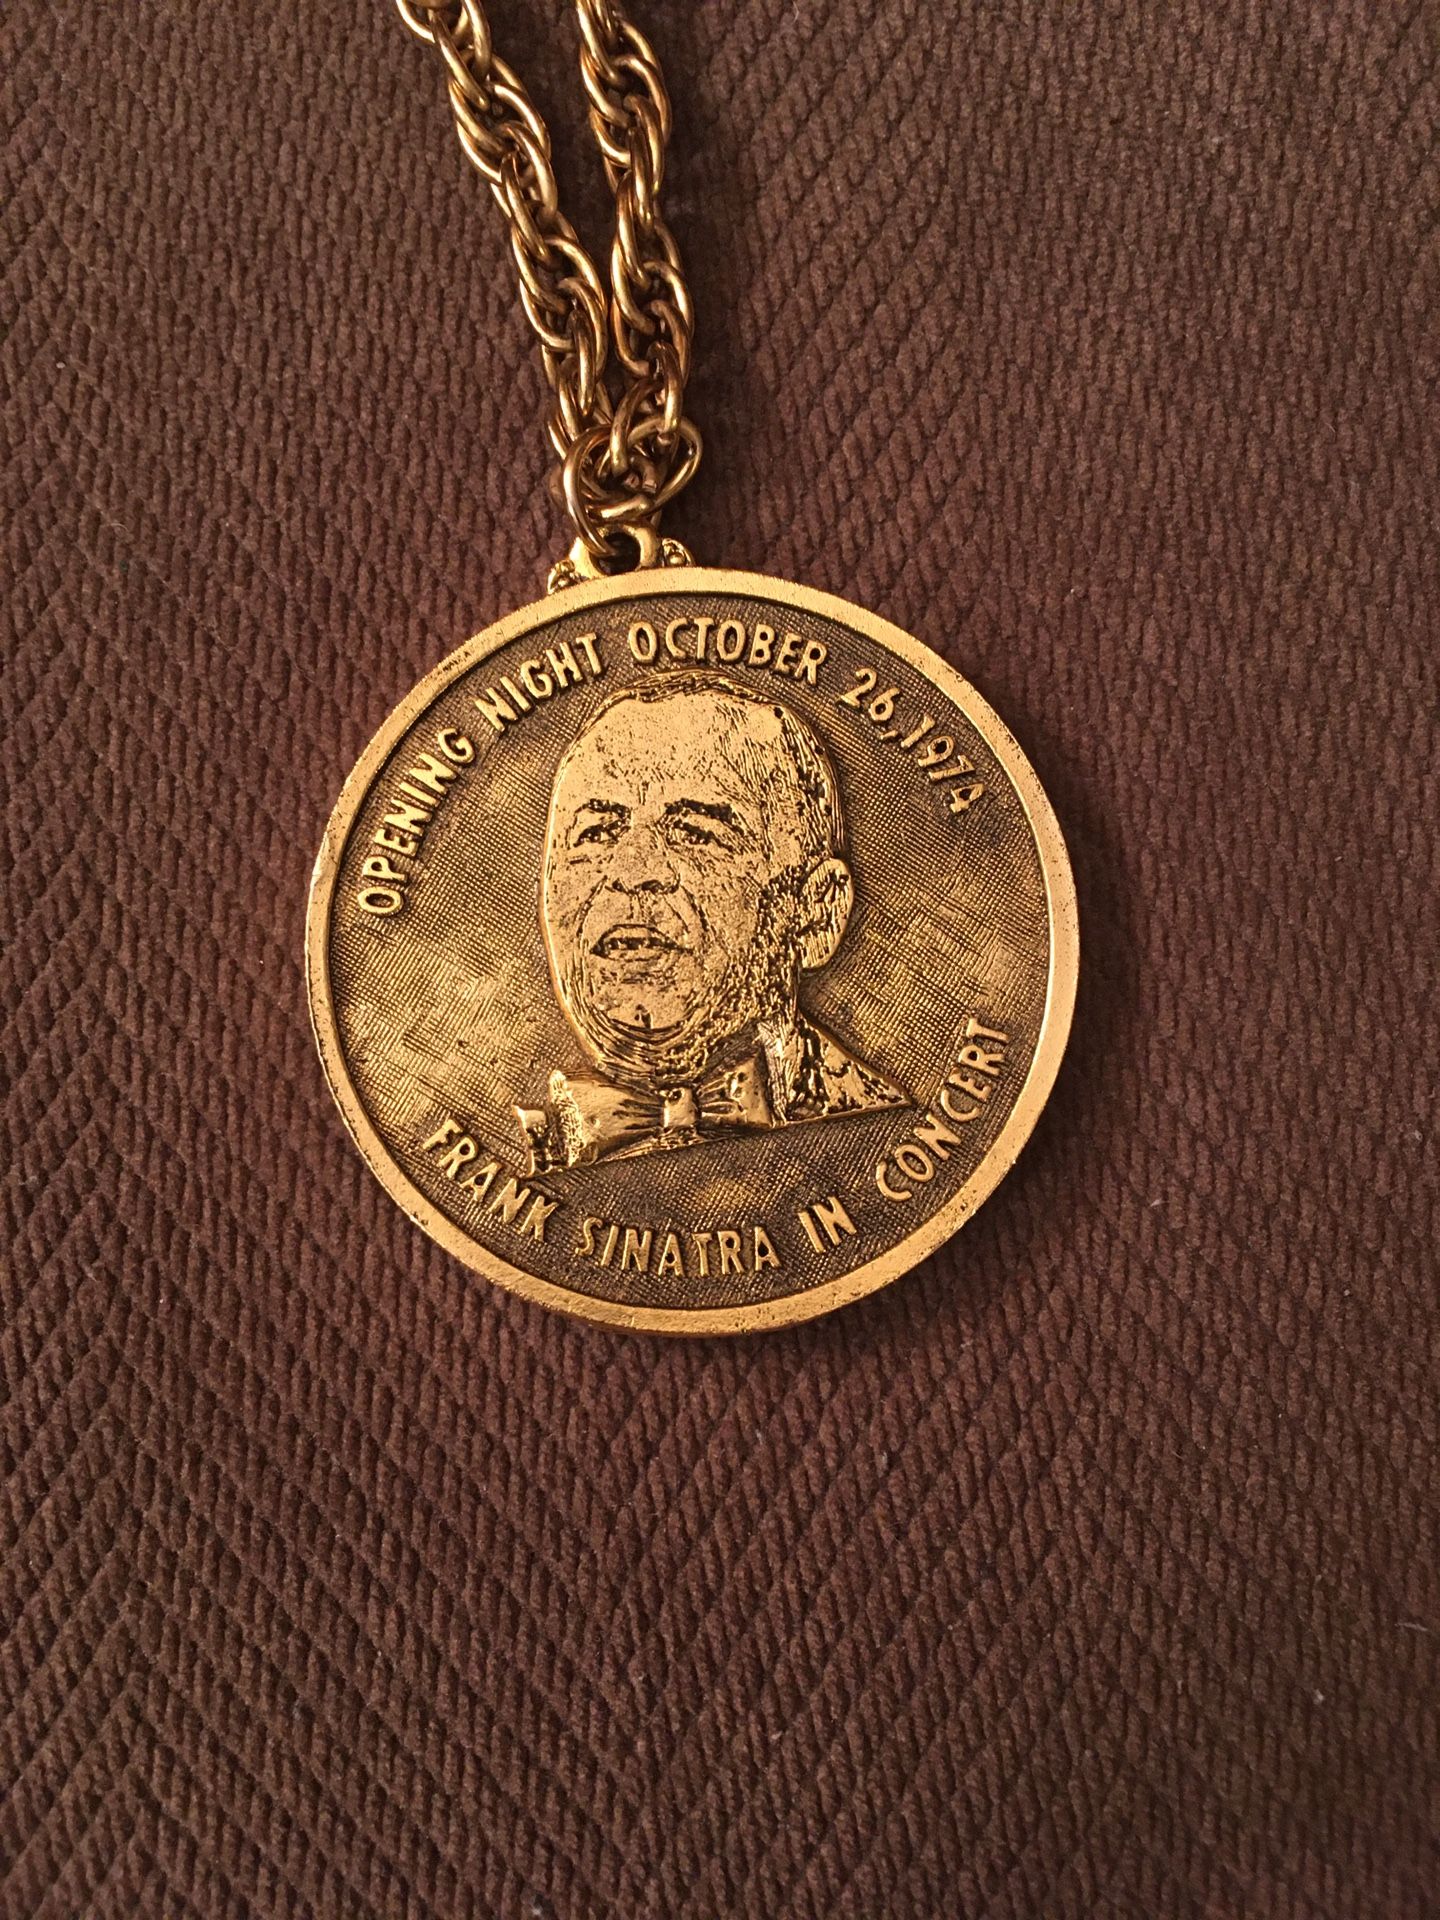 Frank Sinatra collector medal